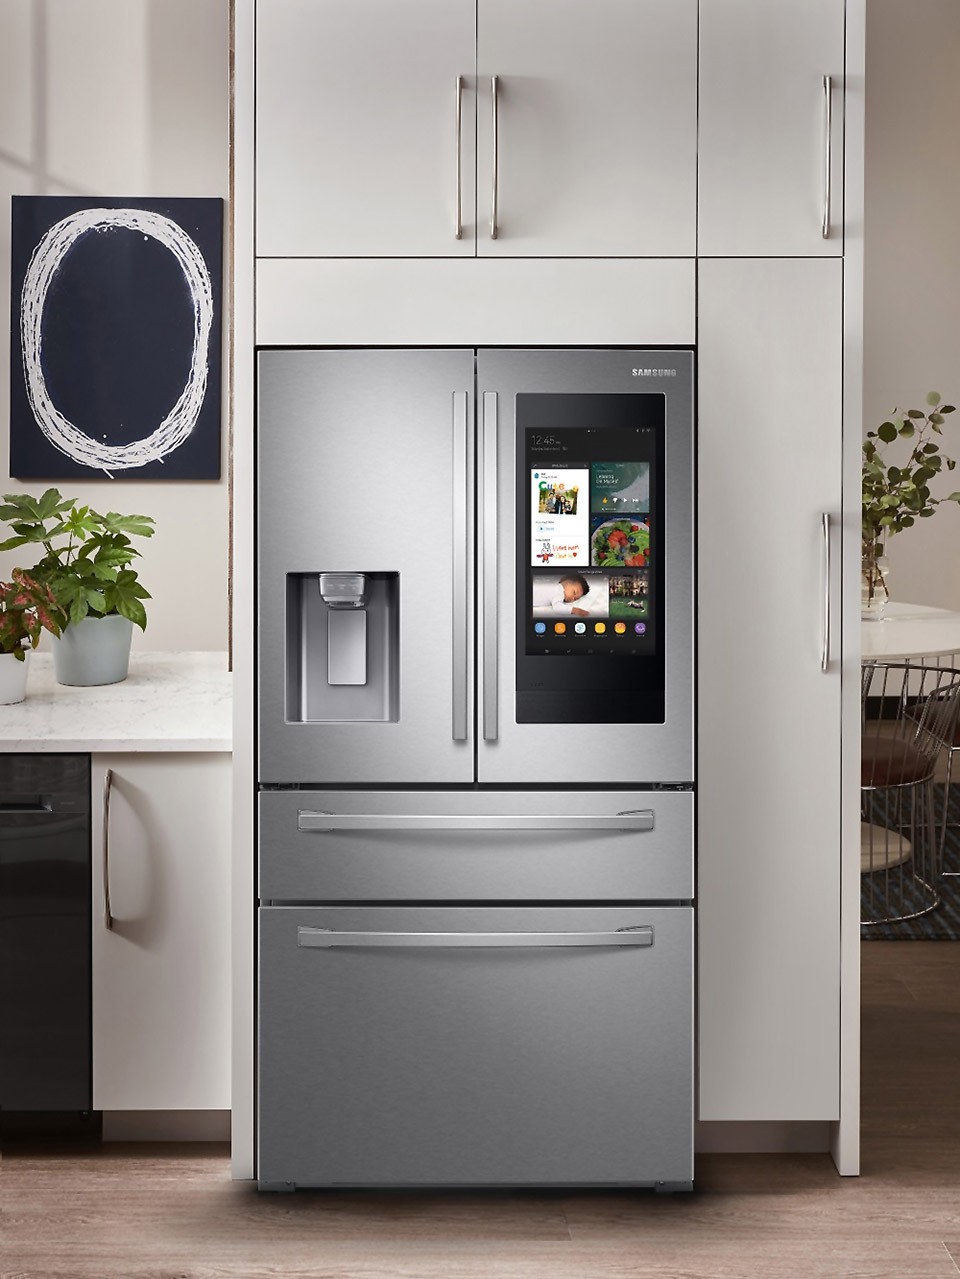 Cool Refrigerator Trends - Kansas City Homes & Style